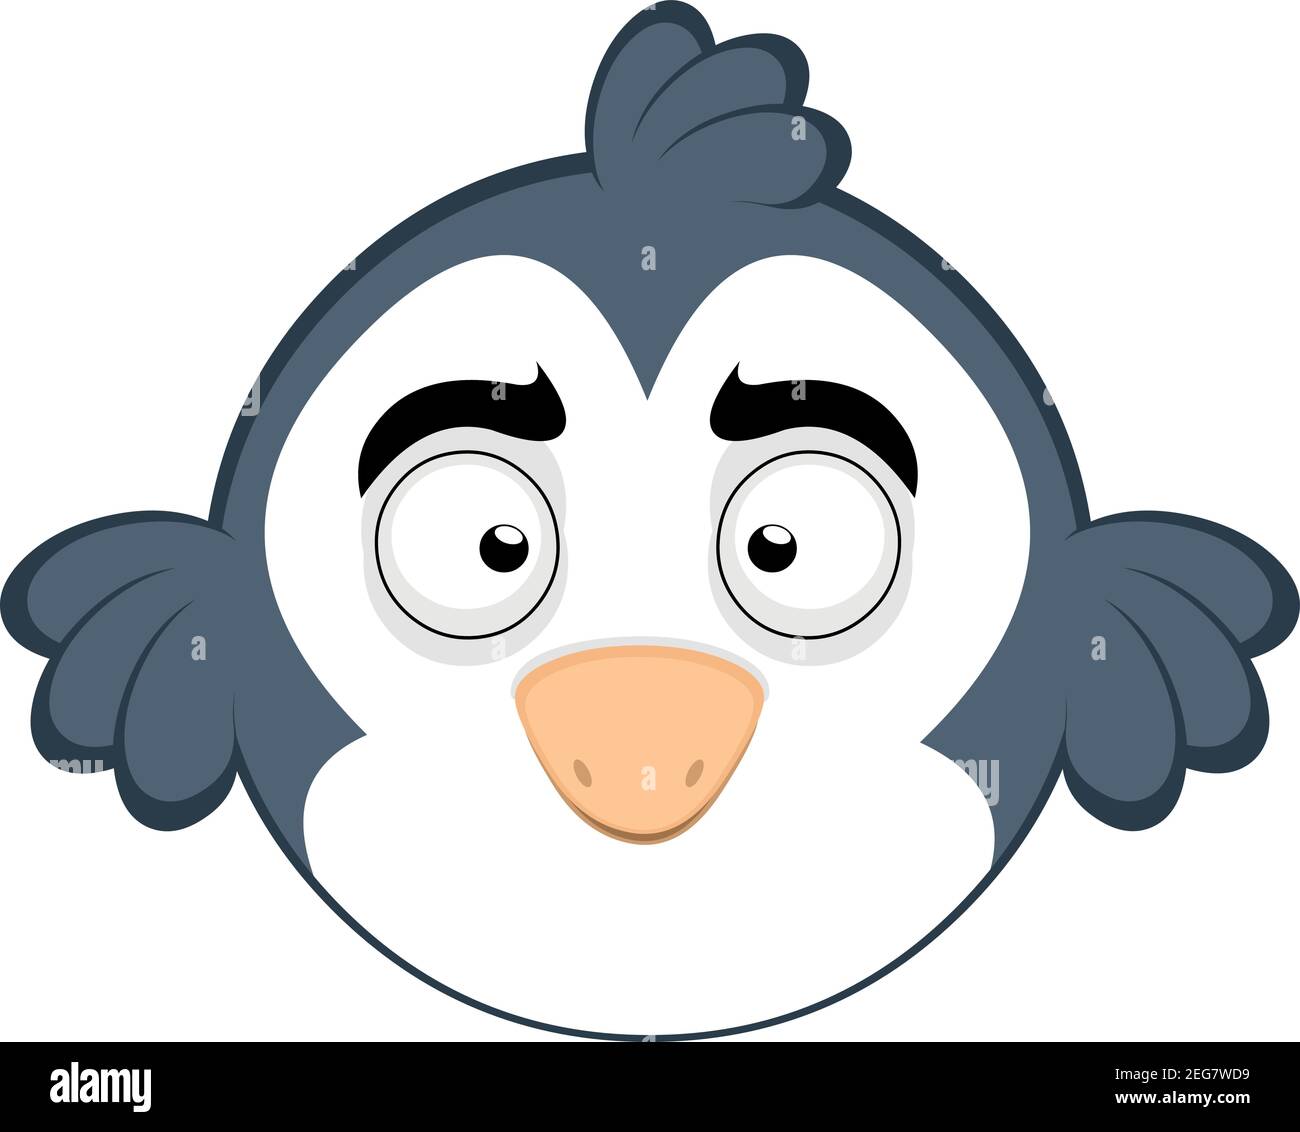 Vector emoticon illustration of a cute blue cartoon bird character Stock Vector